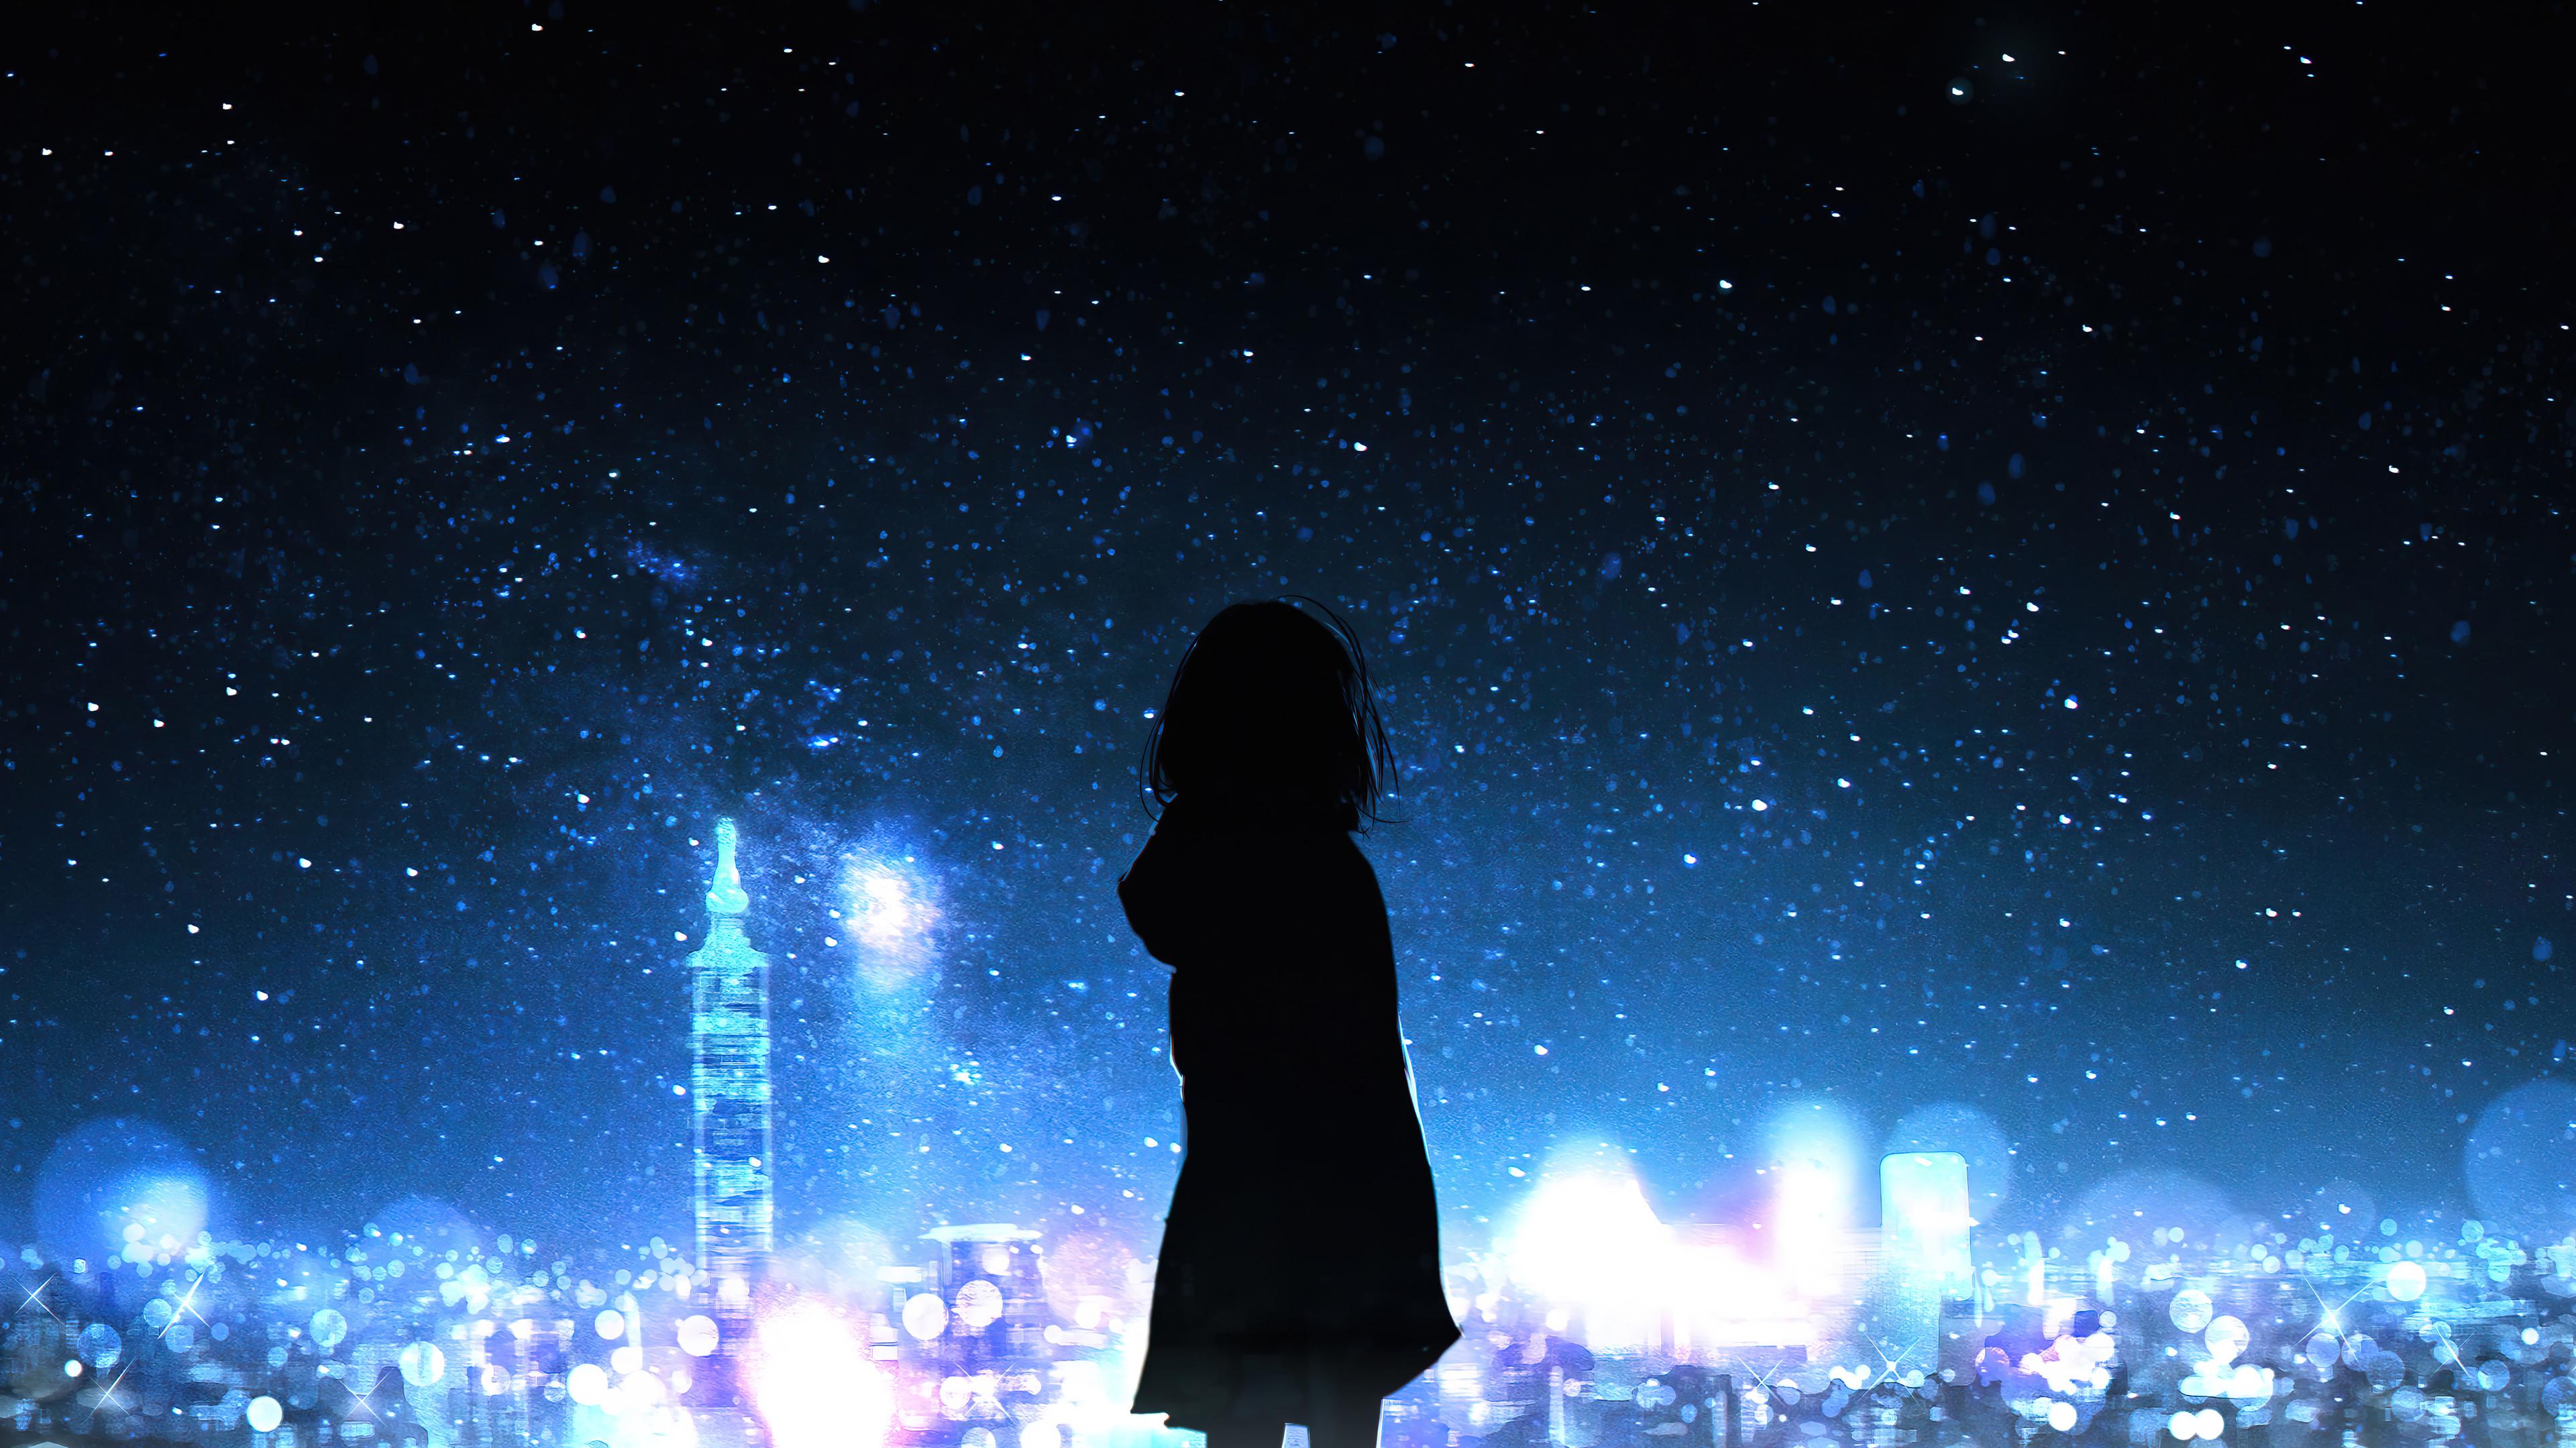 Anime Girl Silhouette Night City Stars Scenery 4k Phone iPhone